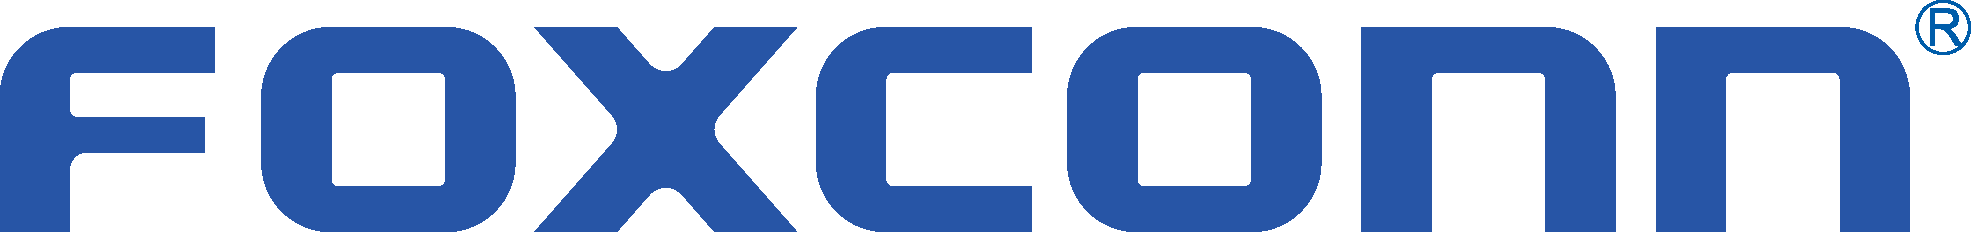 Foxconn Logo - Foxconn Logo Free Vector Download - FreeLogoVectors